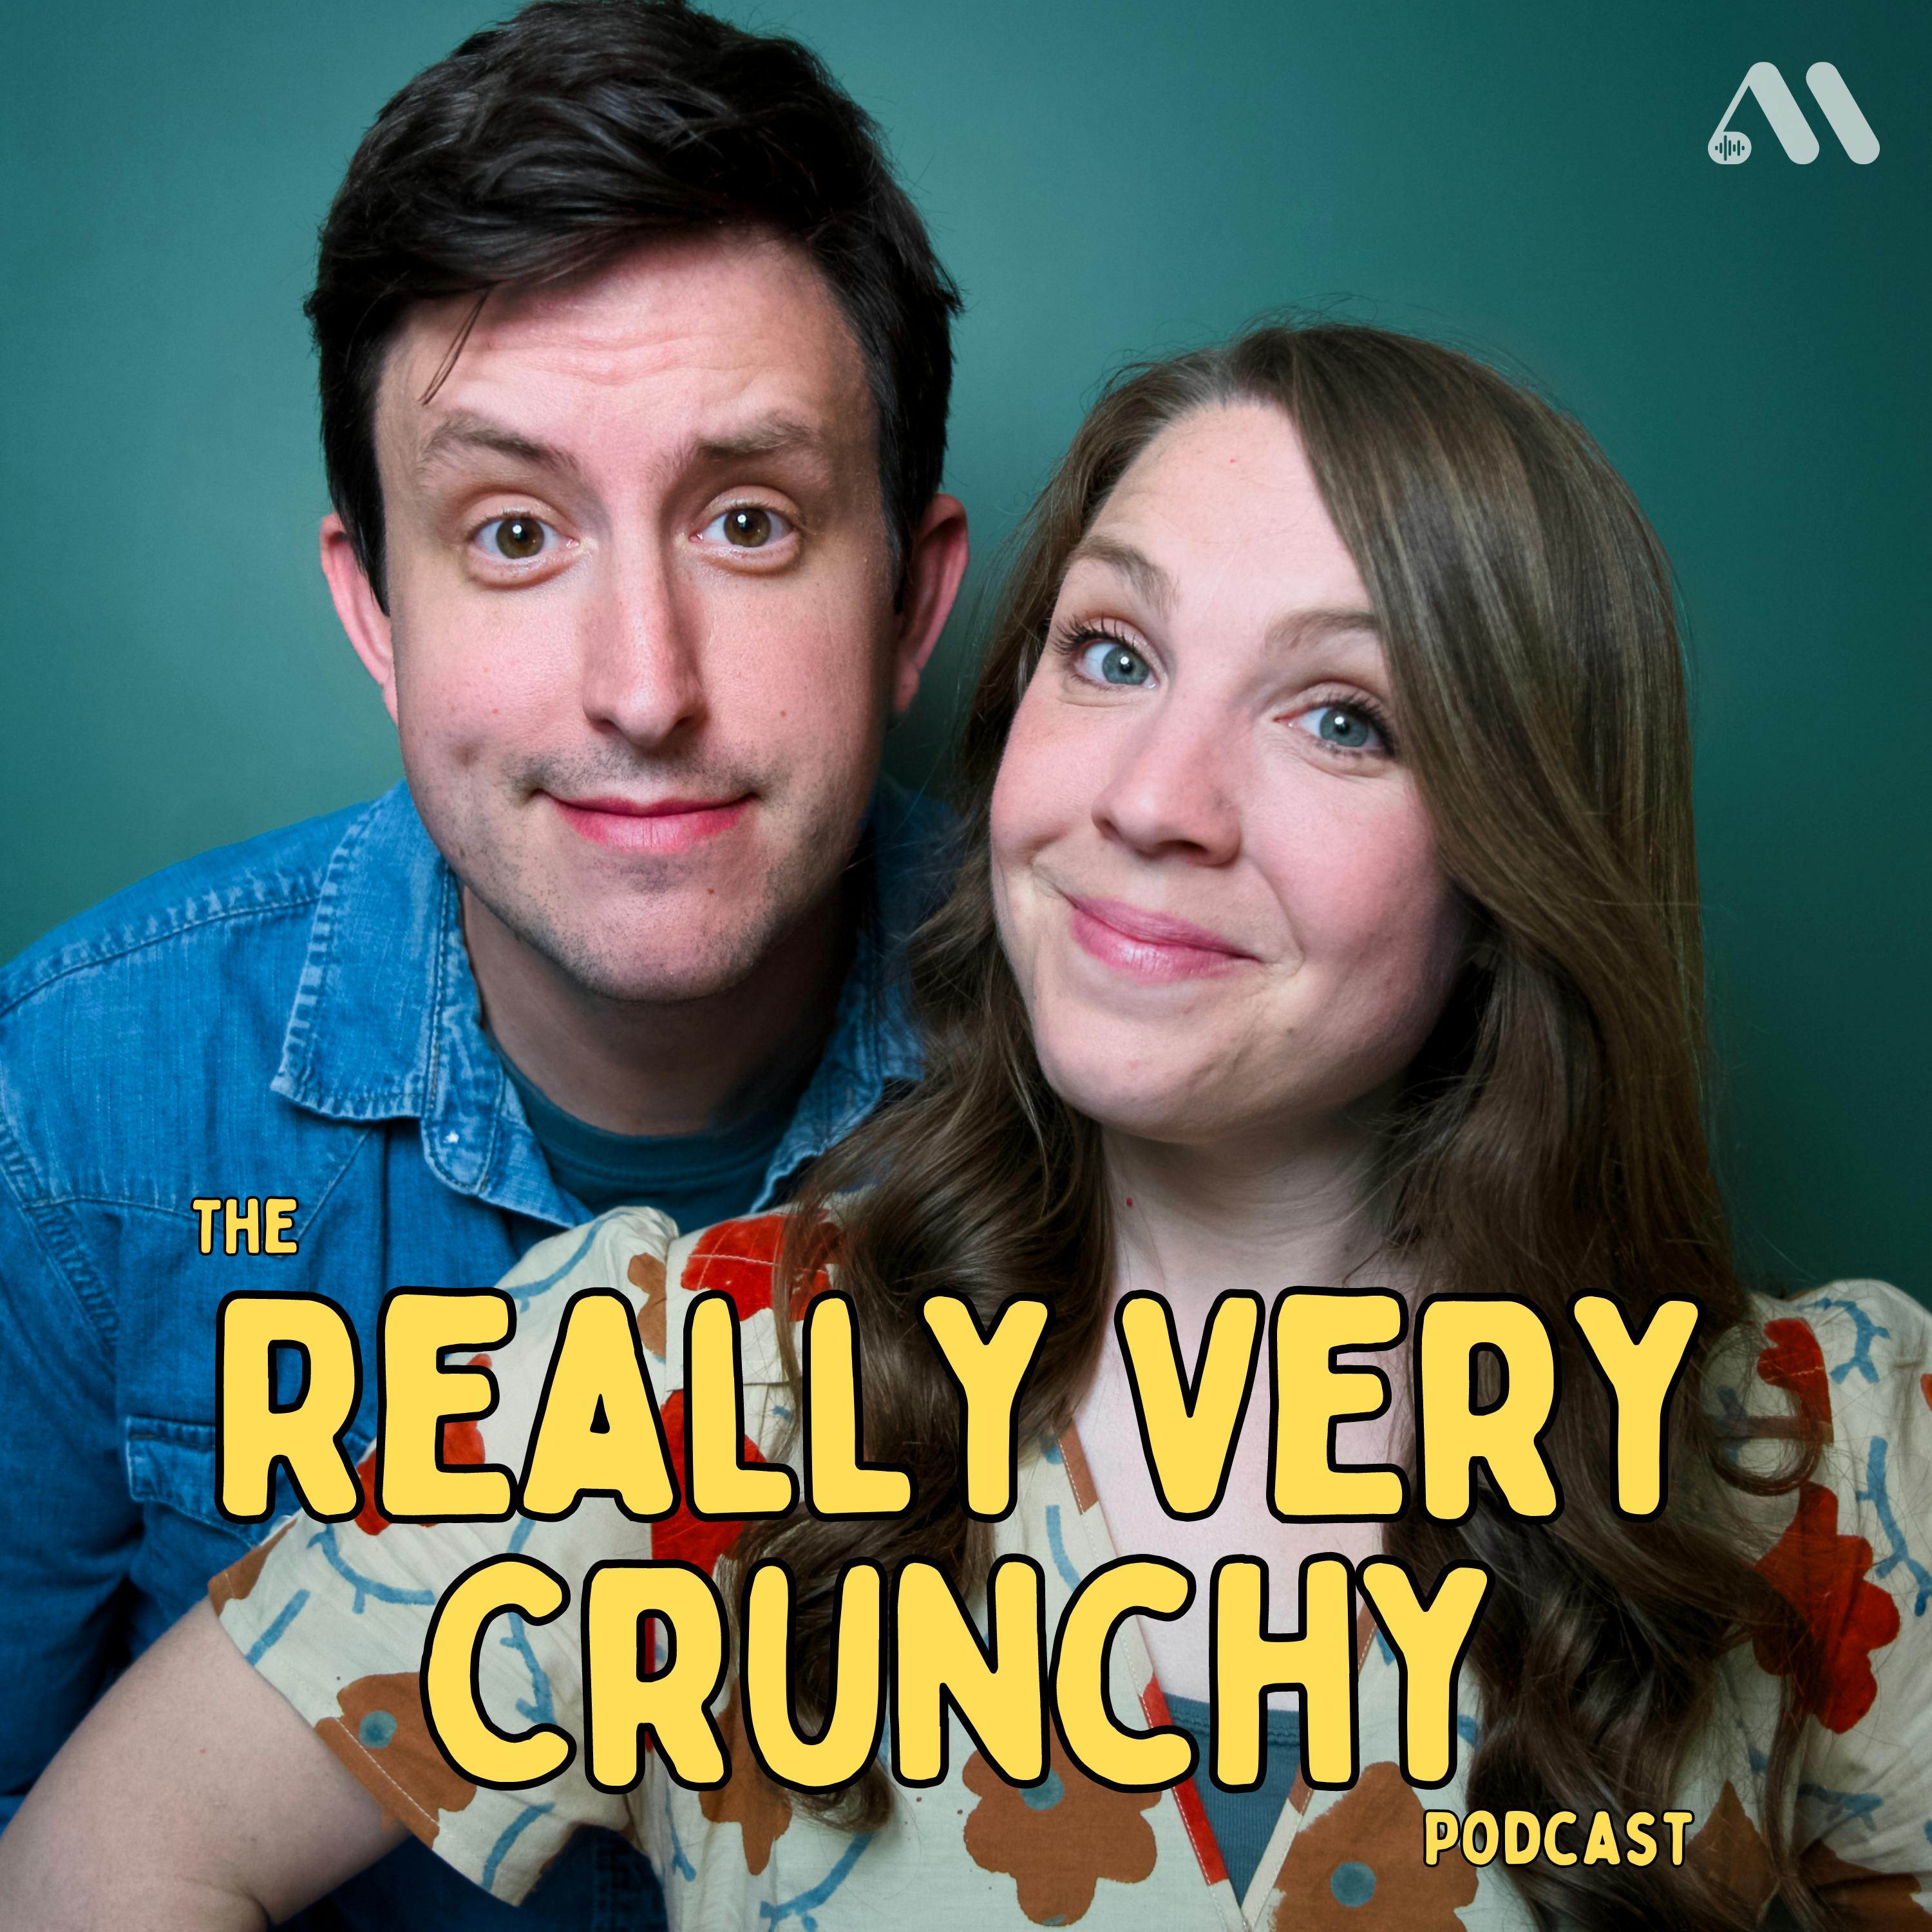 The Really Very Crunchy Podcast by Emily & Jason Morrow